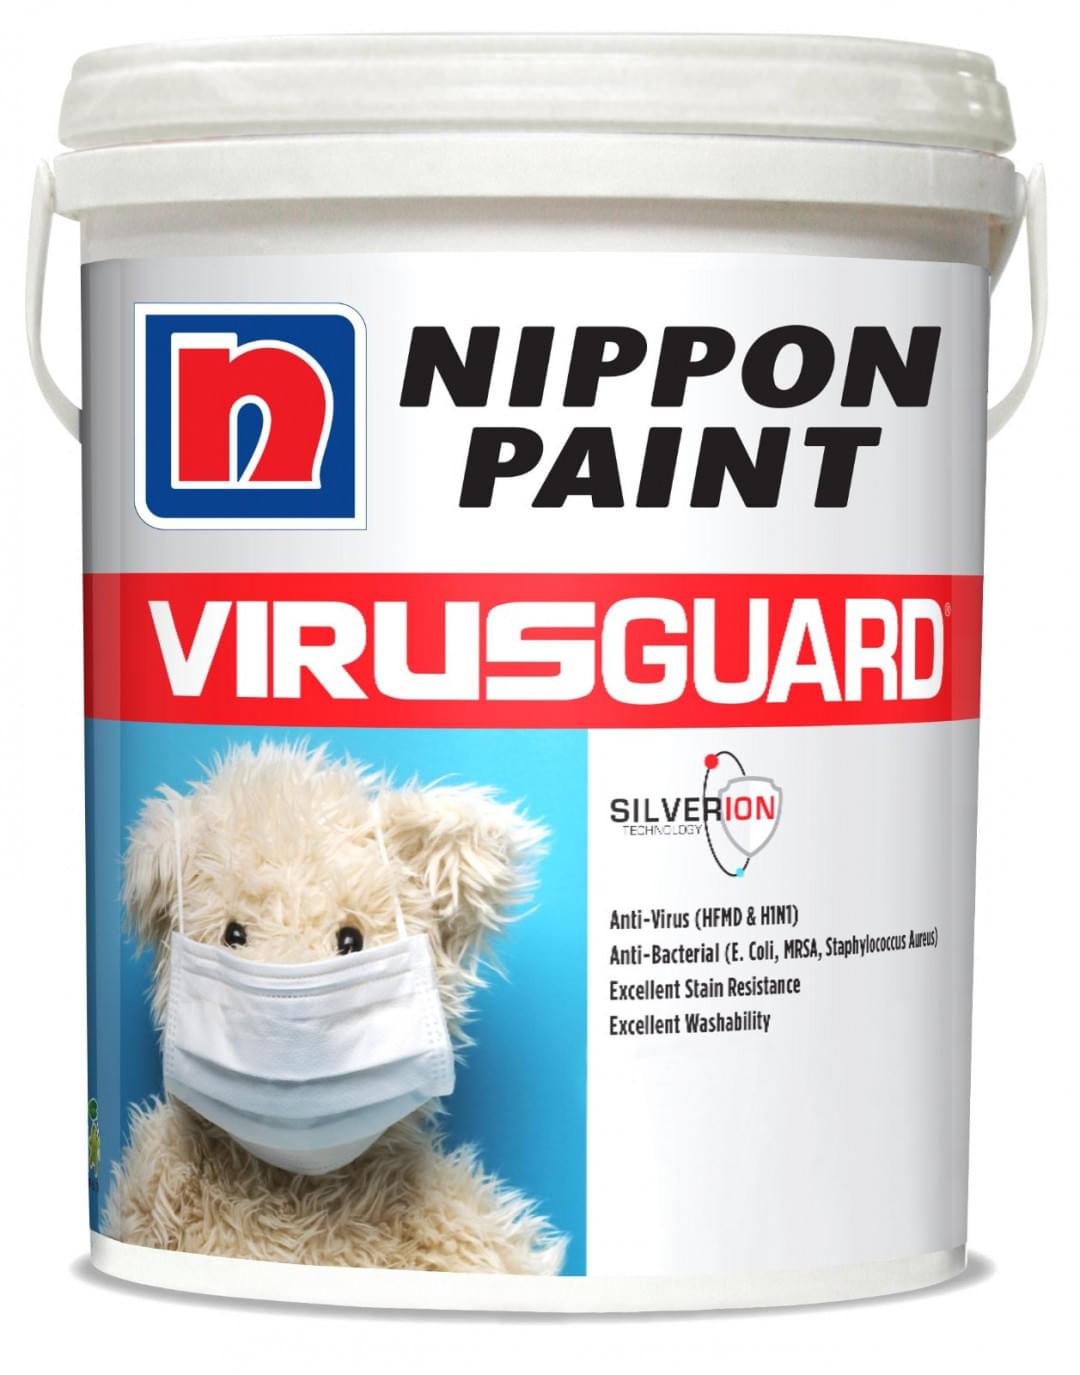 Nippon Paint VirusGuard Anti-Viral Paint from Nippon Paint